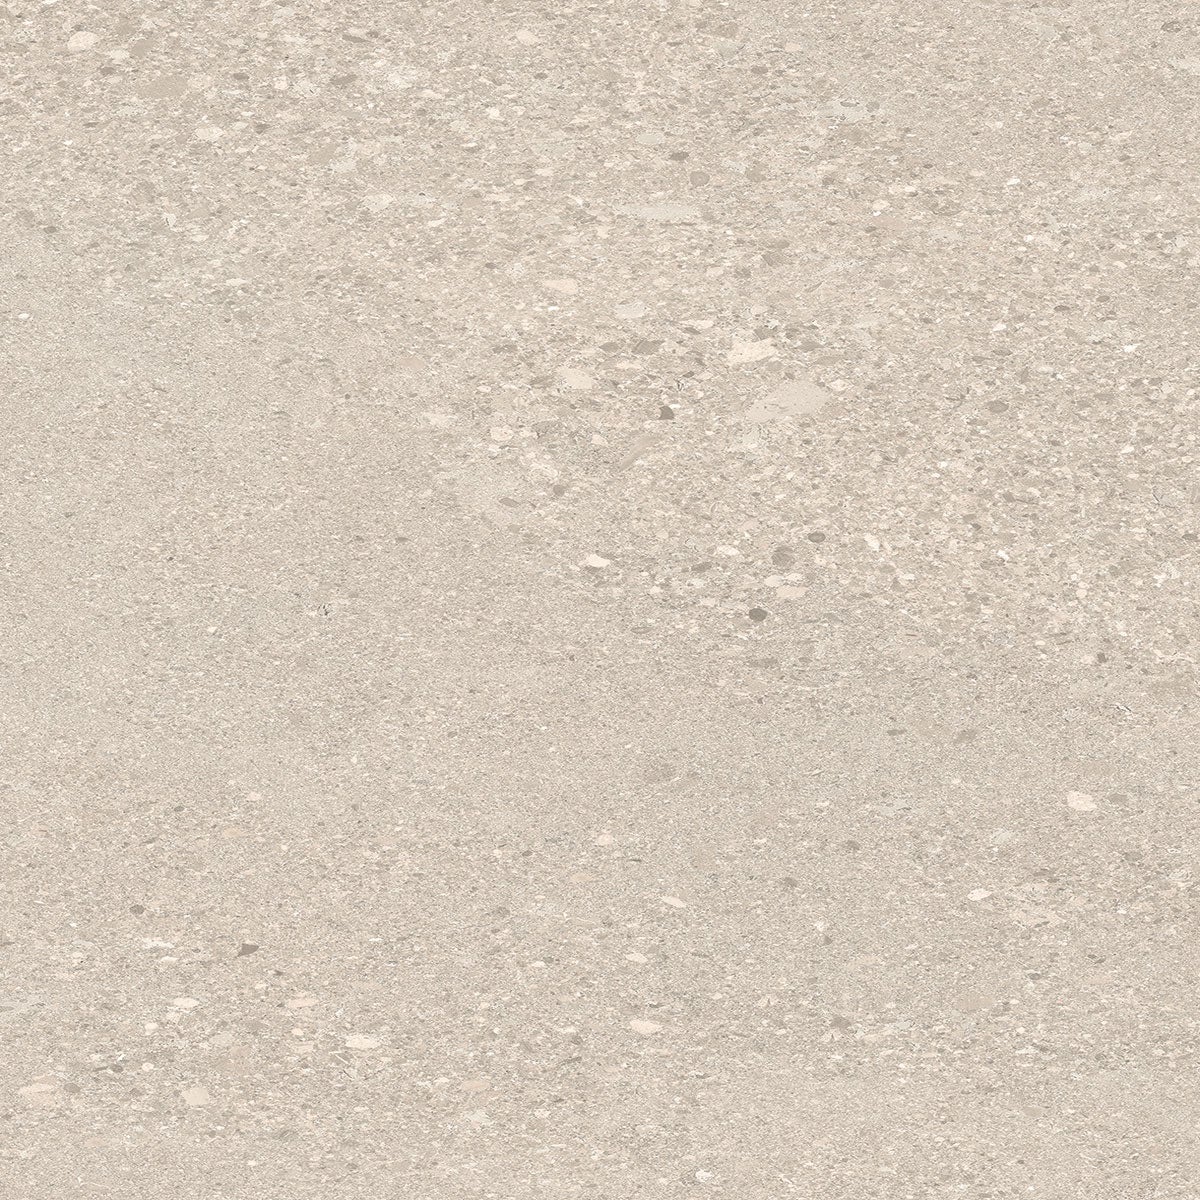 Cement Stone Rough Grain Sand Sample